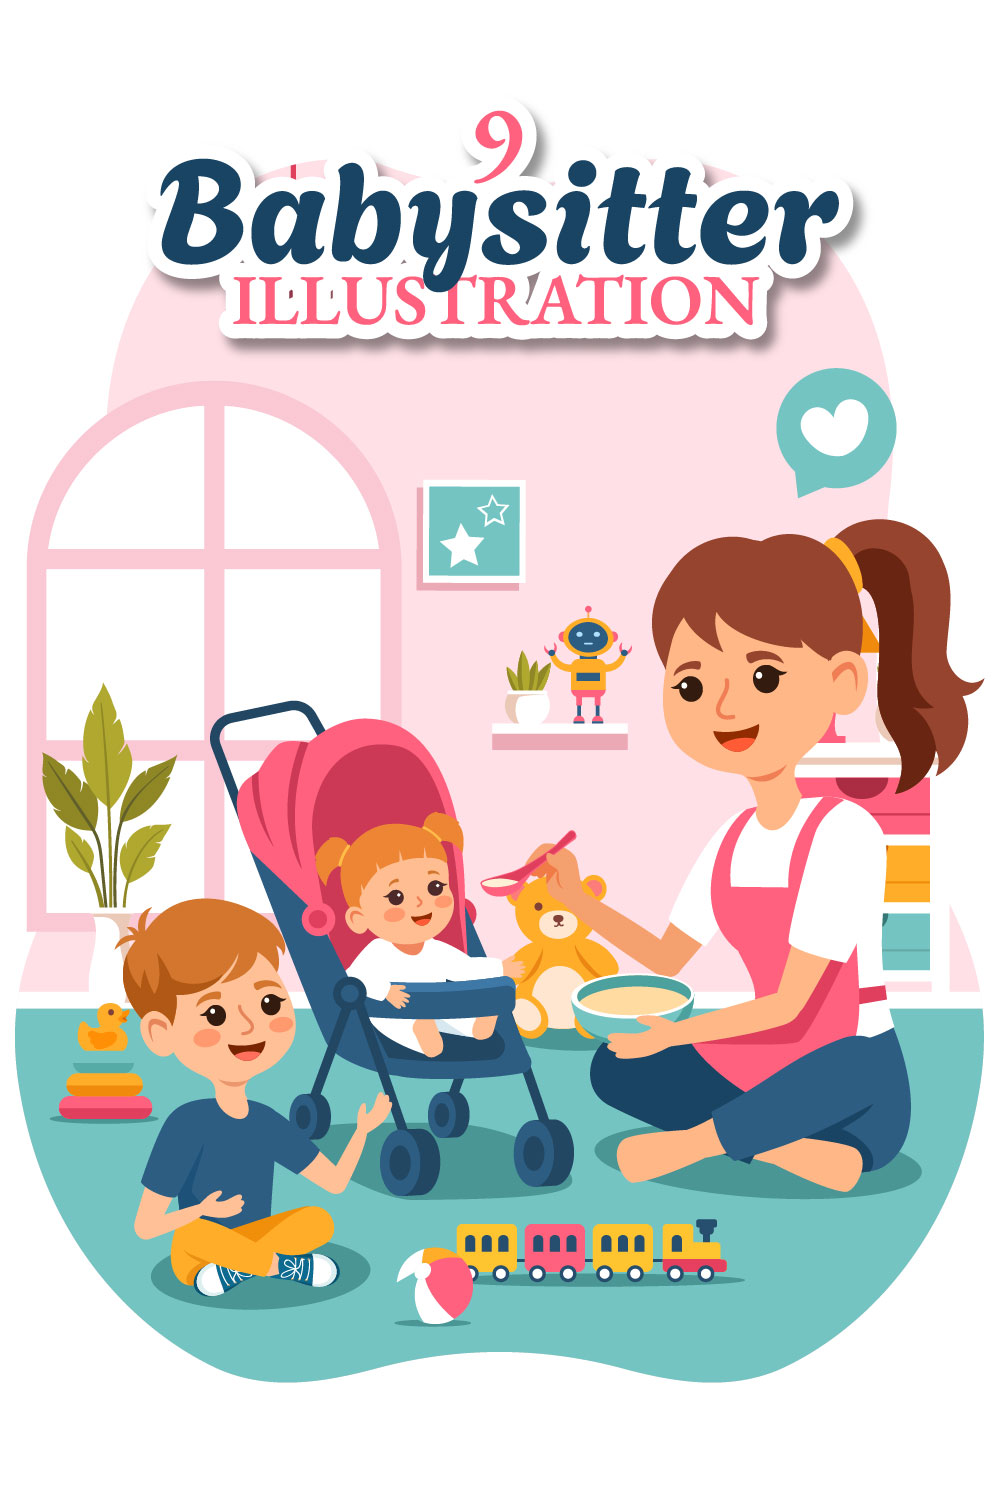 9 Babysitter Services Illustration pinterest preview image.